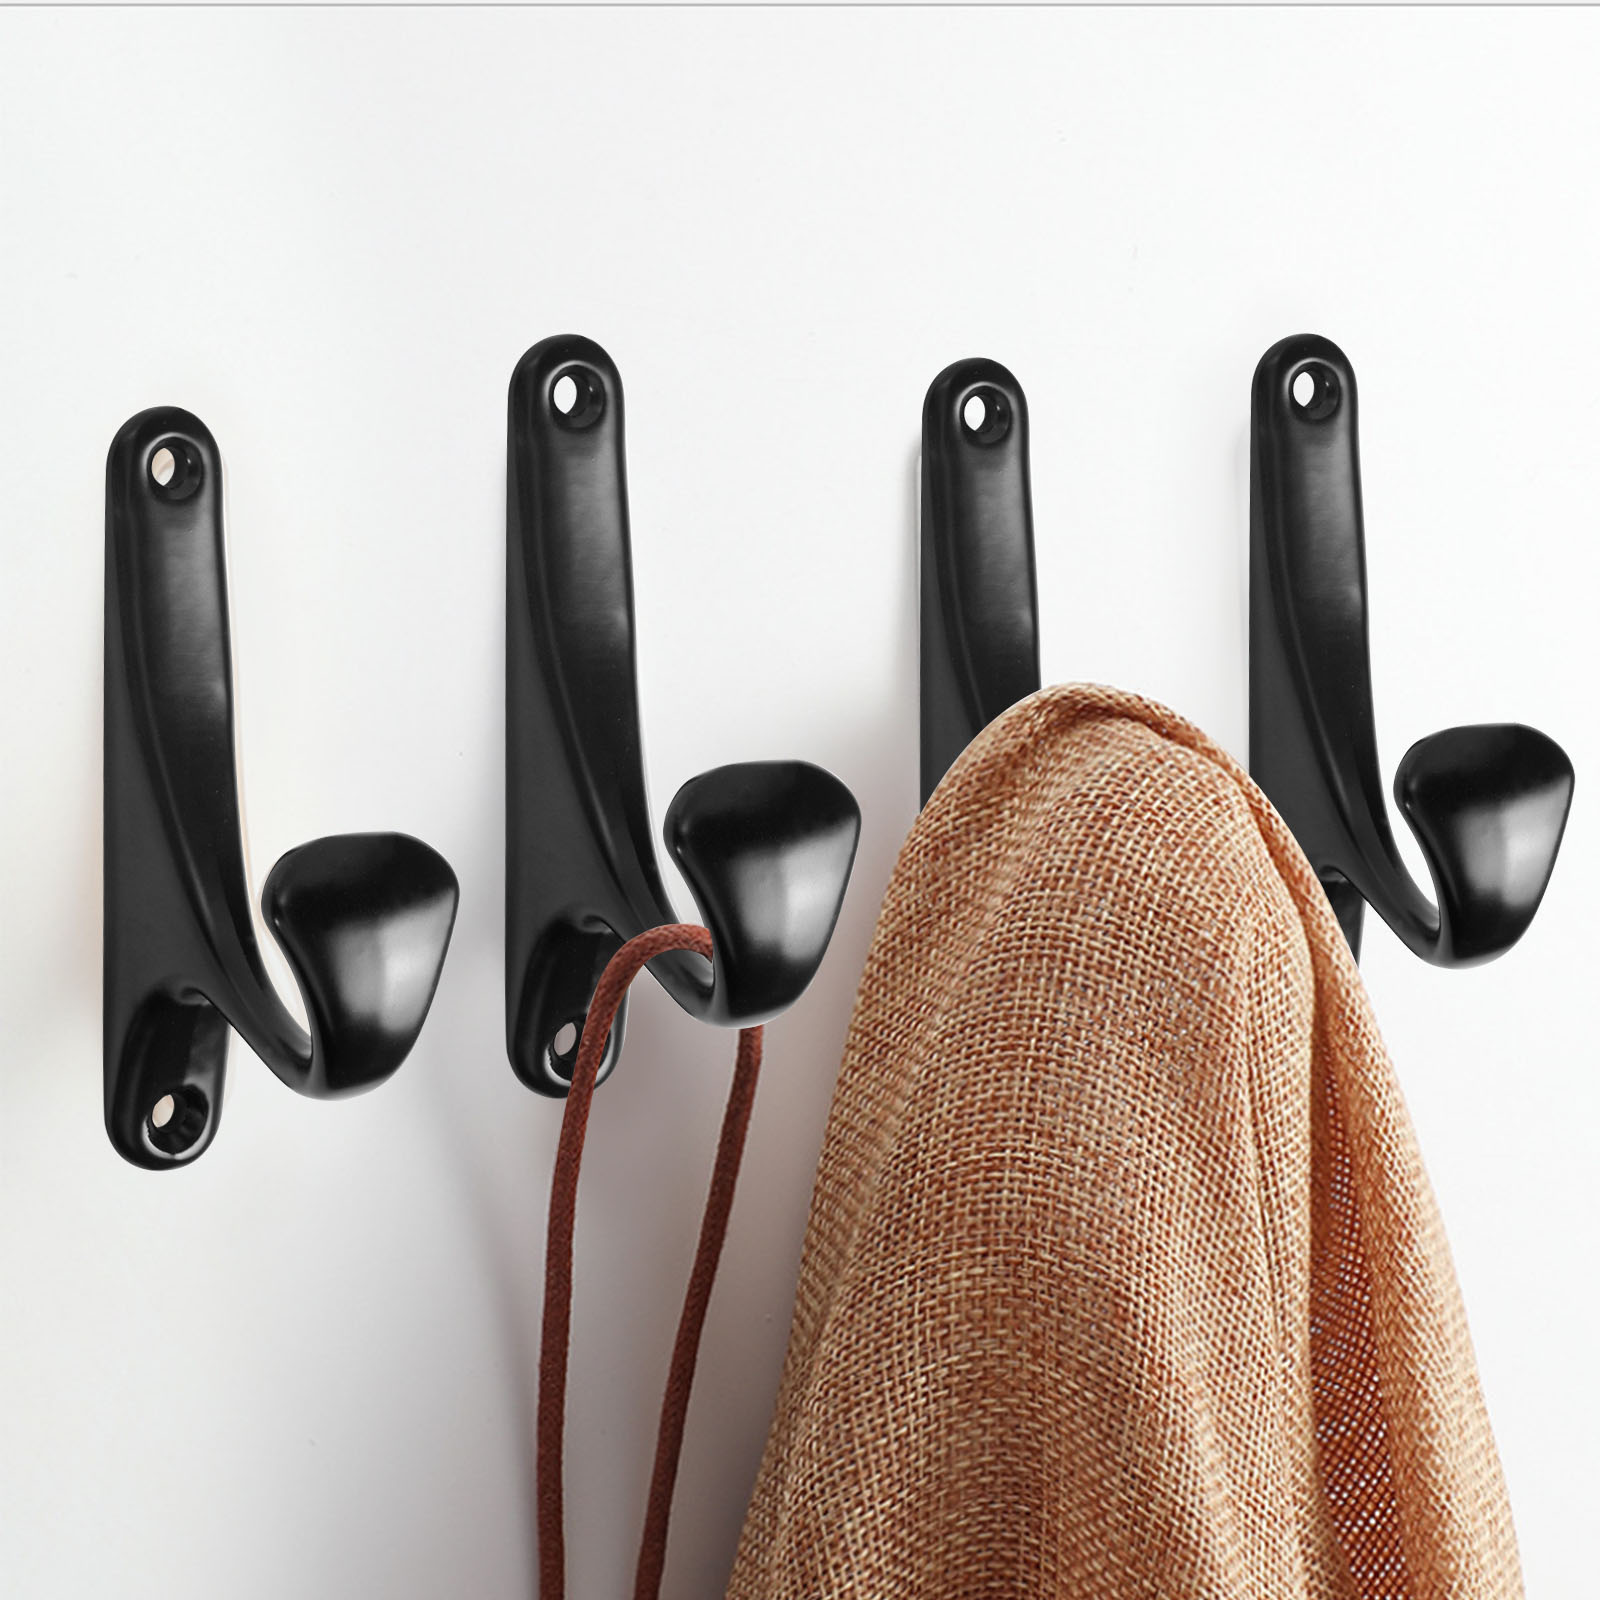 Riapawel 40Pcs Robe Coat Hooks,Metal Door&Wall Mounted Coat Hook Hanger  with 80Pcs Screws,for Hanging Clothes,Robe,Towel,Hat,Key 